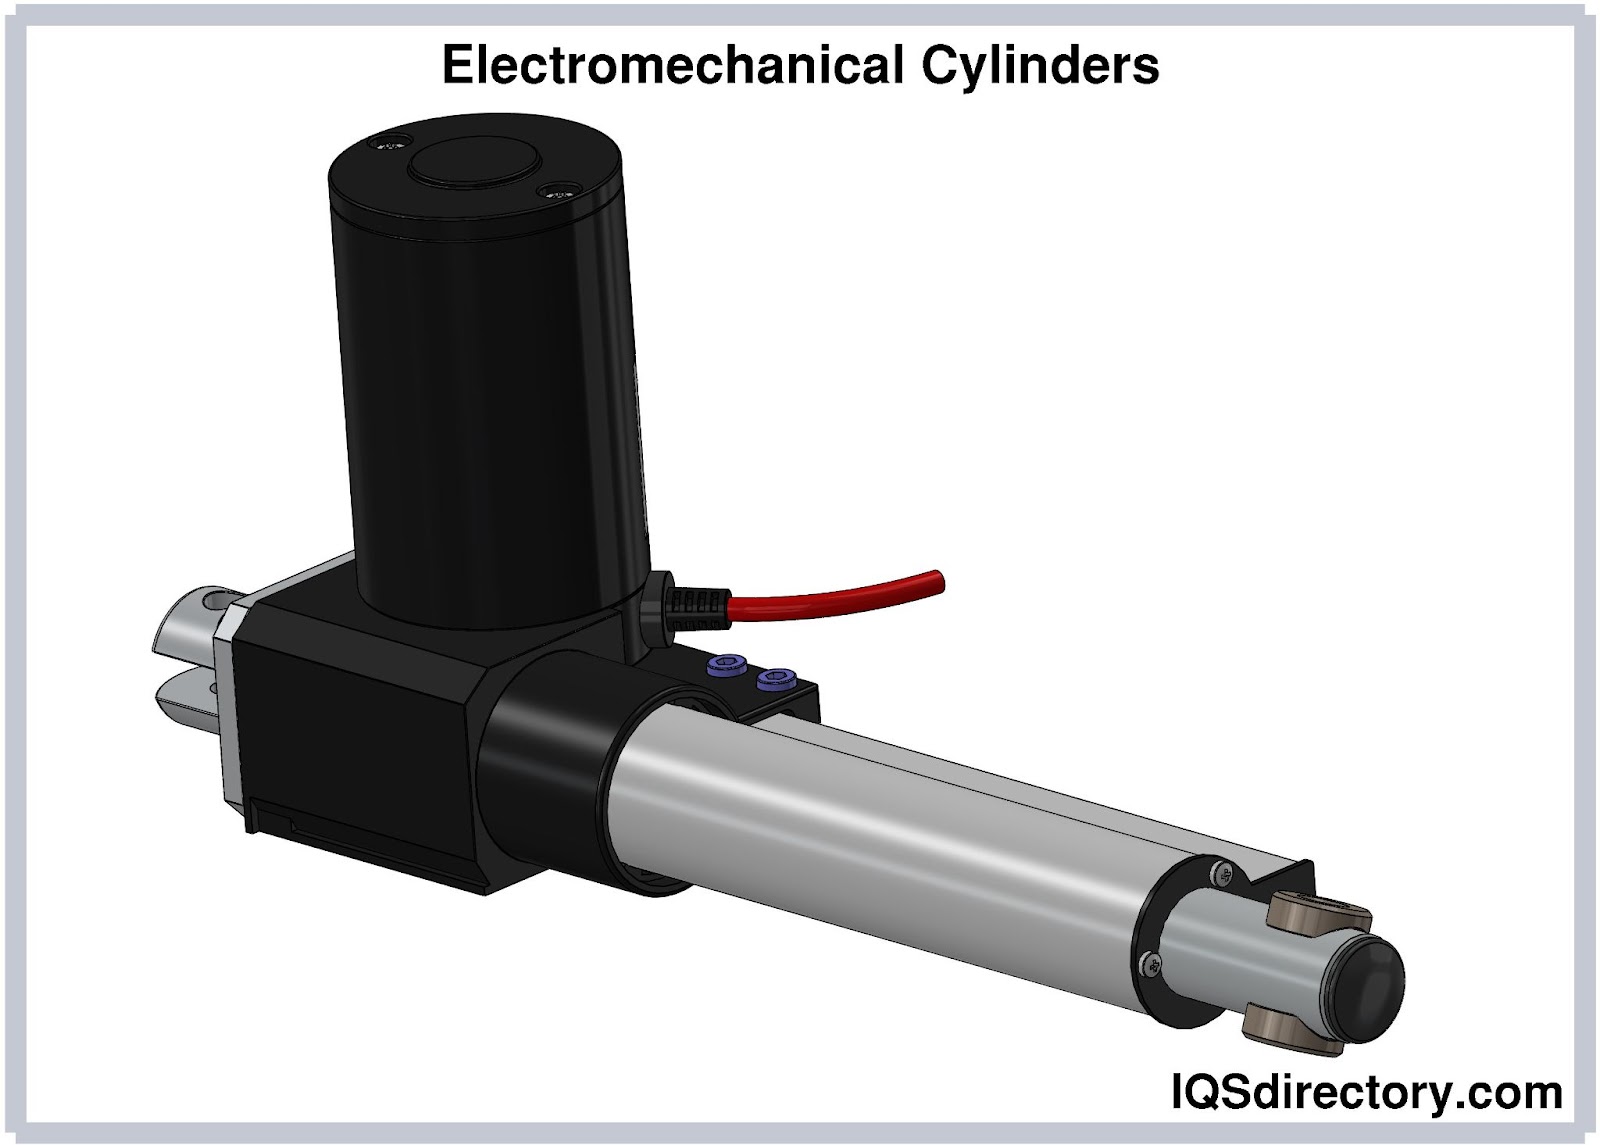 Electromechanical Cylinders